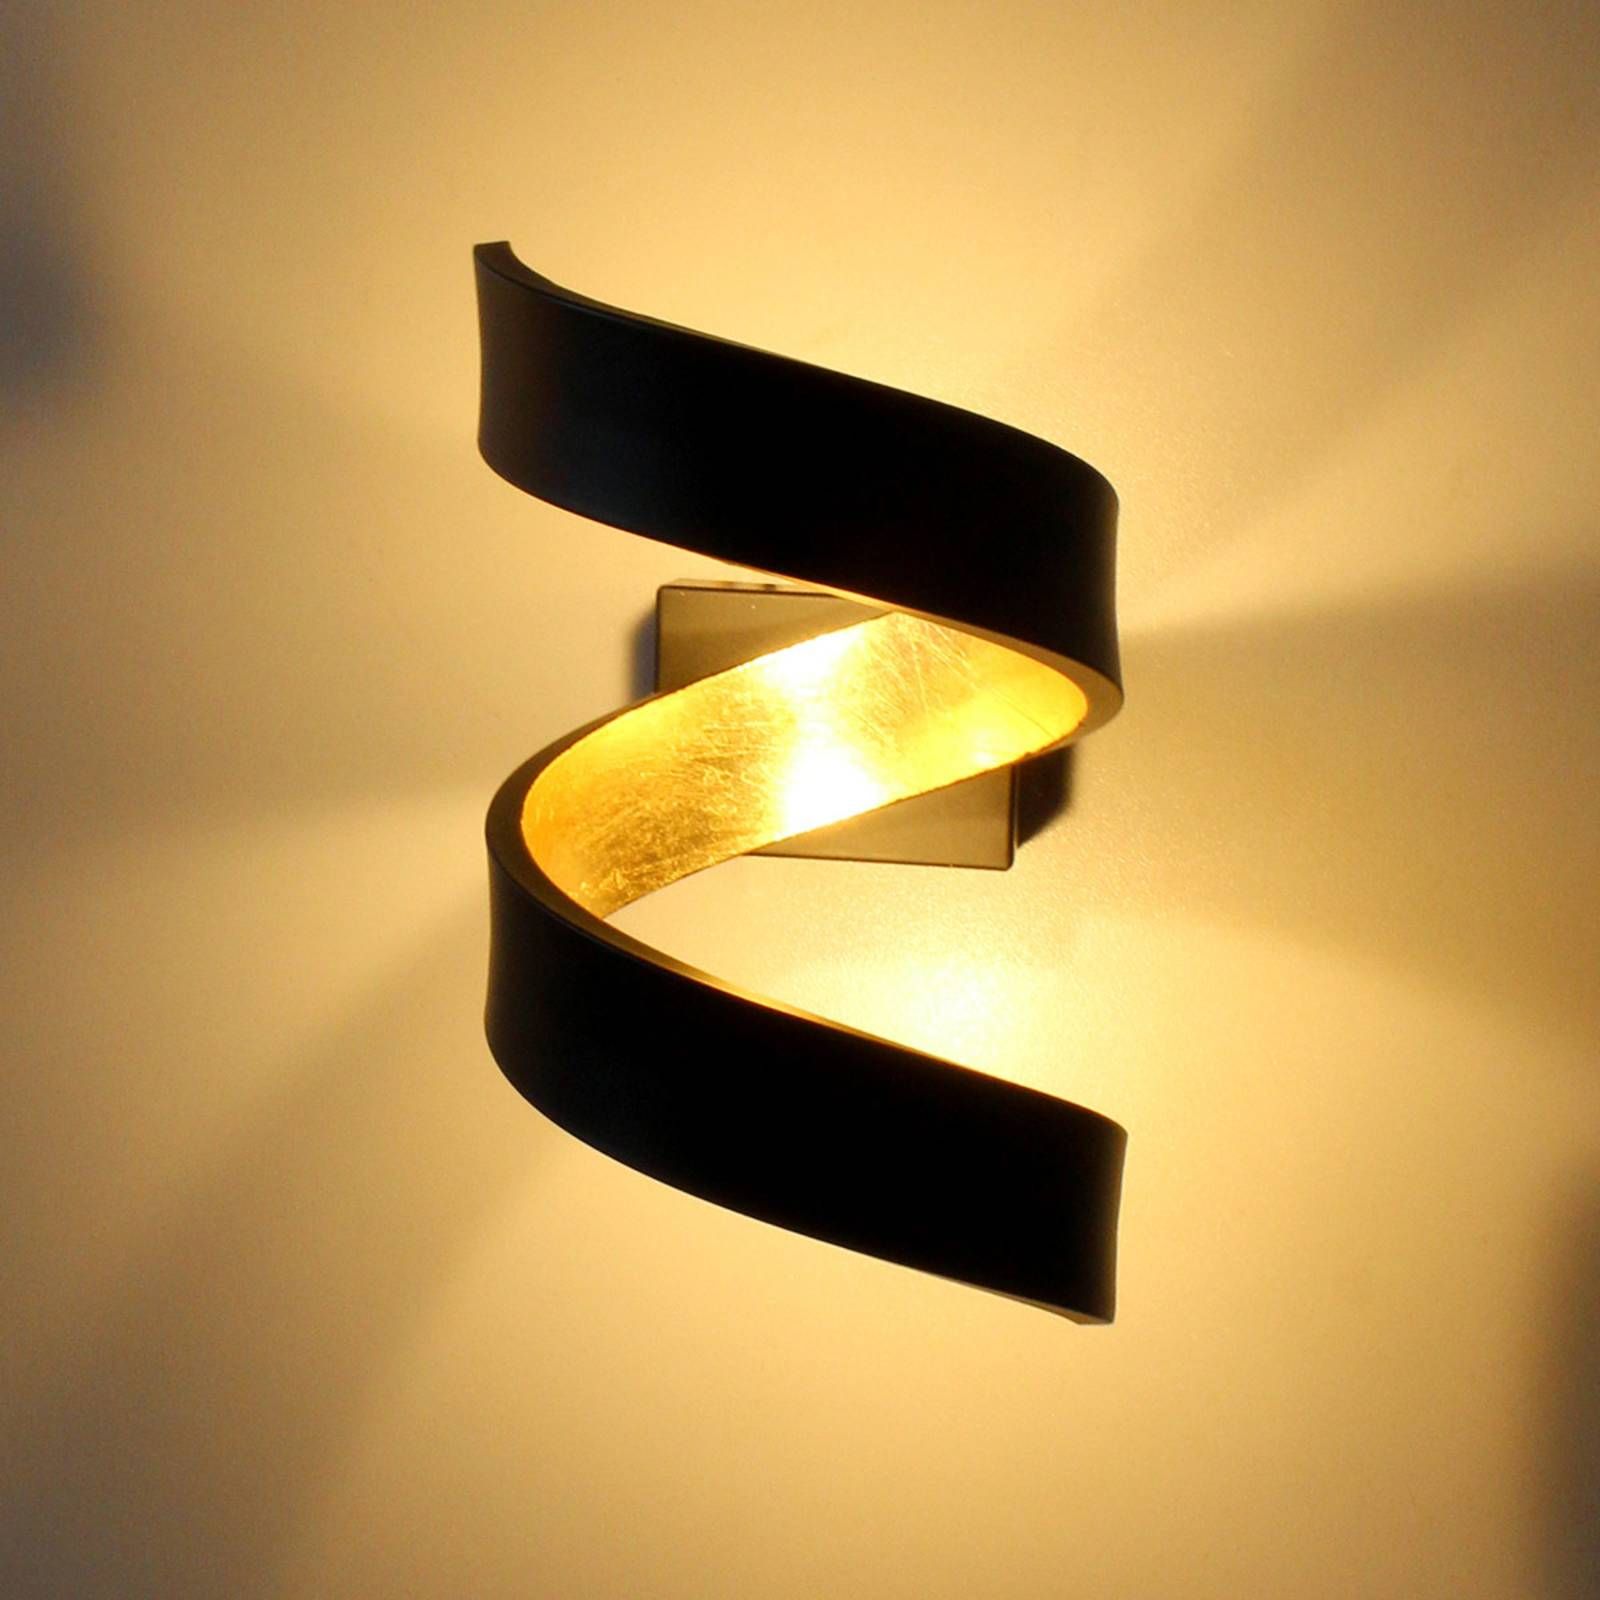 Eco-Light Nástenné LED svietidlo Helix, čierno-zlaté, 17 cm, Obývacia izba / jedáleň, kov, 6W, L: 10 cm, K: 17cm